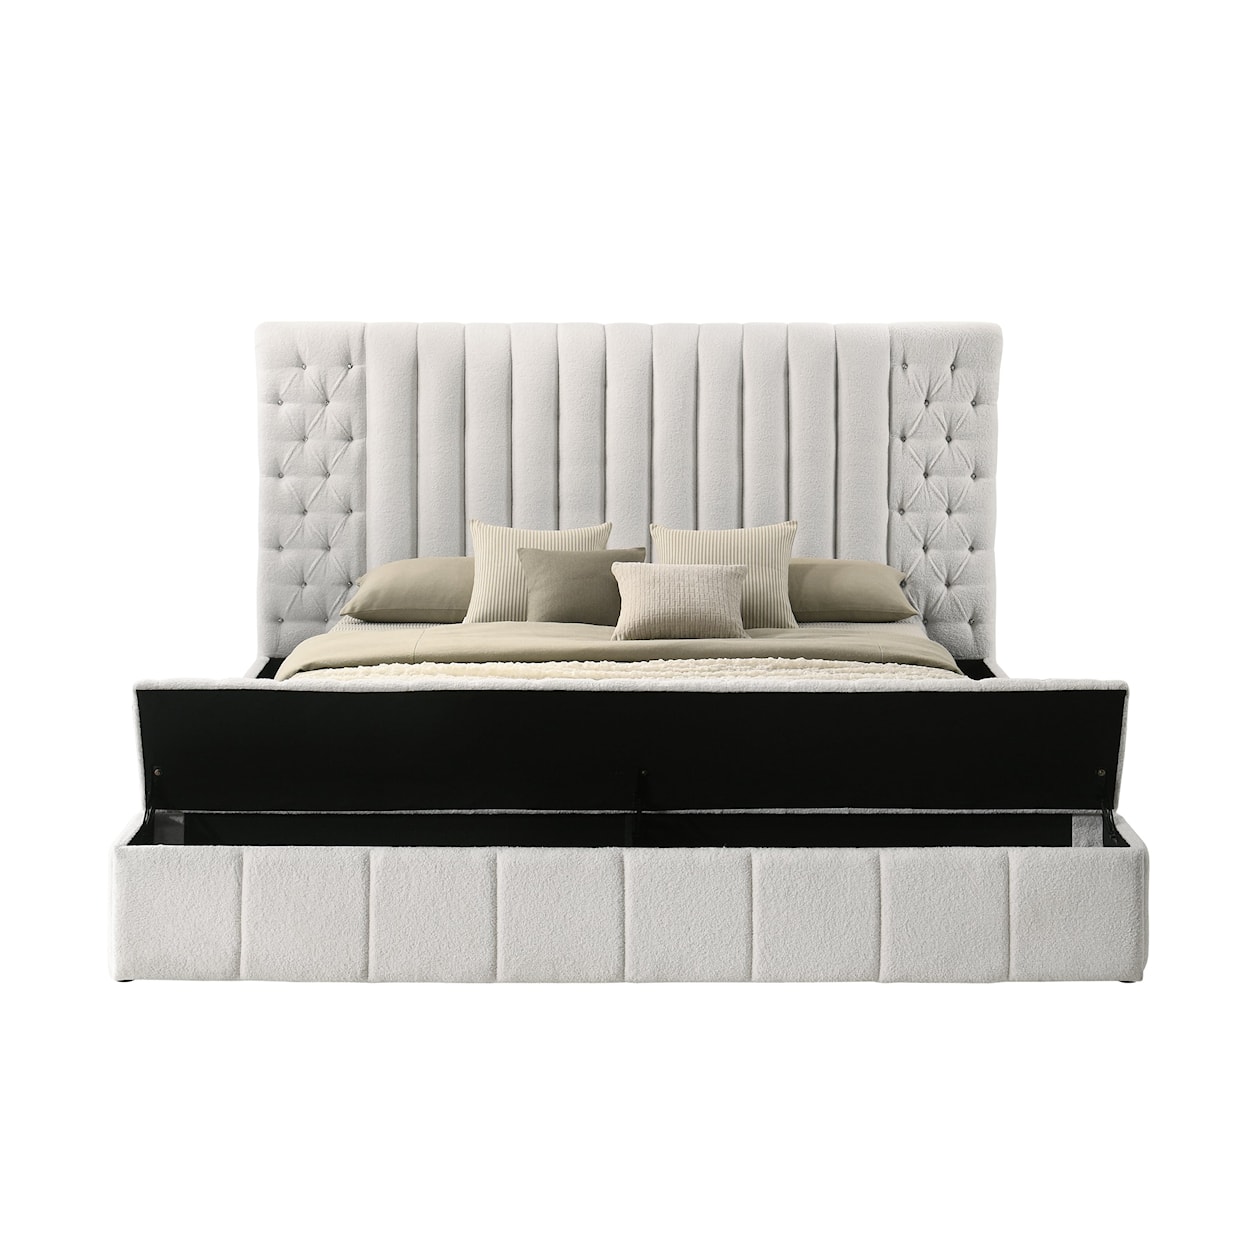 Crown Mark DANBURY Upholstered Storage Bed - Queen